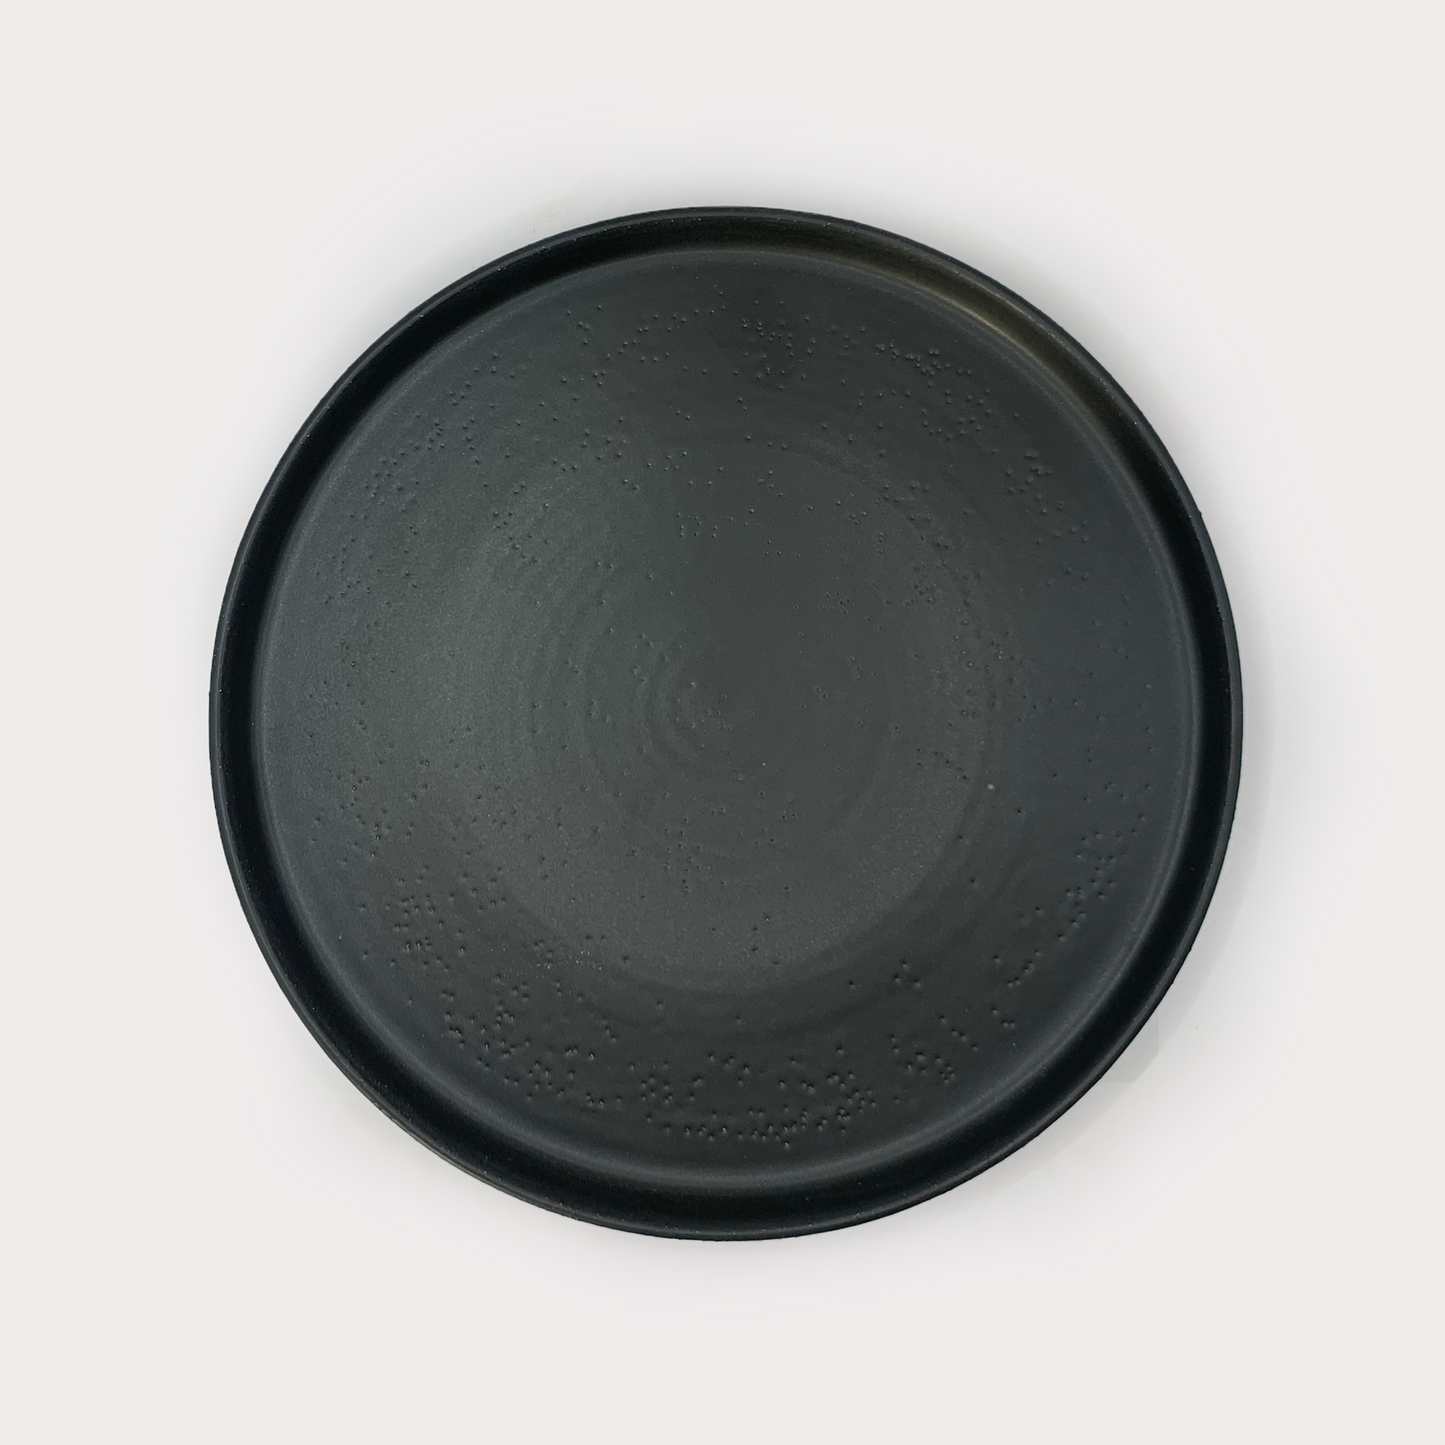 Black dinnerware set - 4 pieces